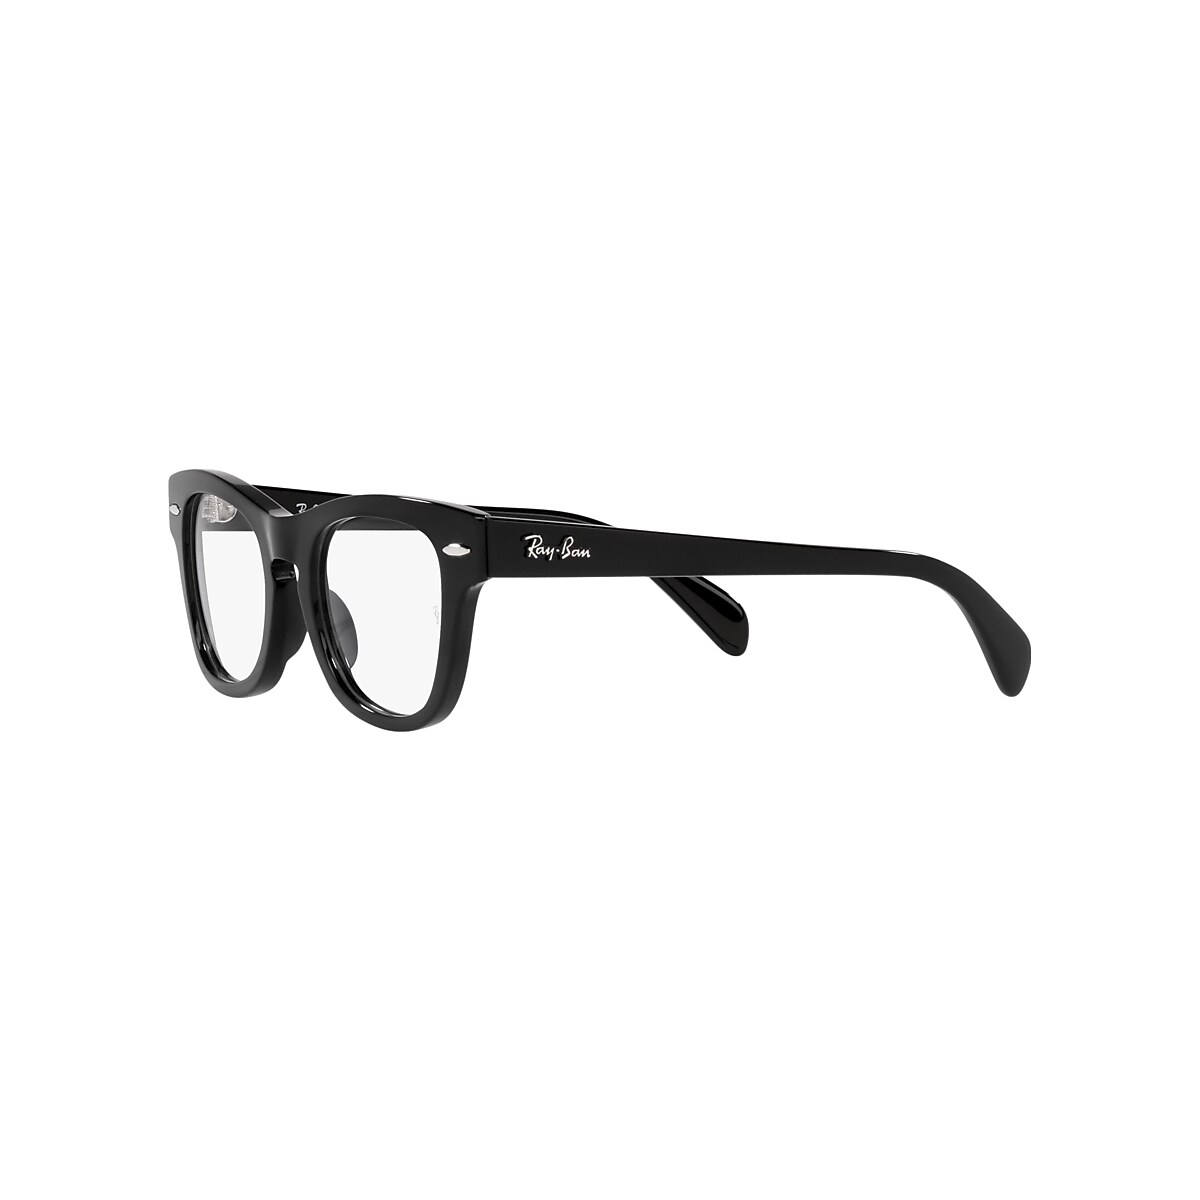 RB9707V OPTICS KIDS Eyeglasses with Black Frame - Ray-Ban